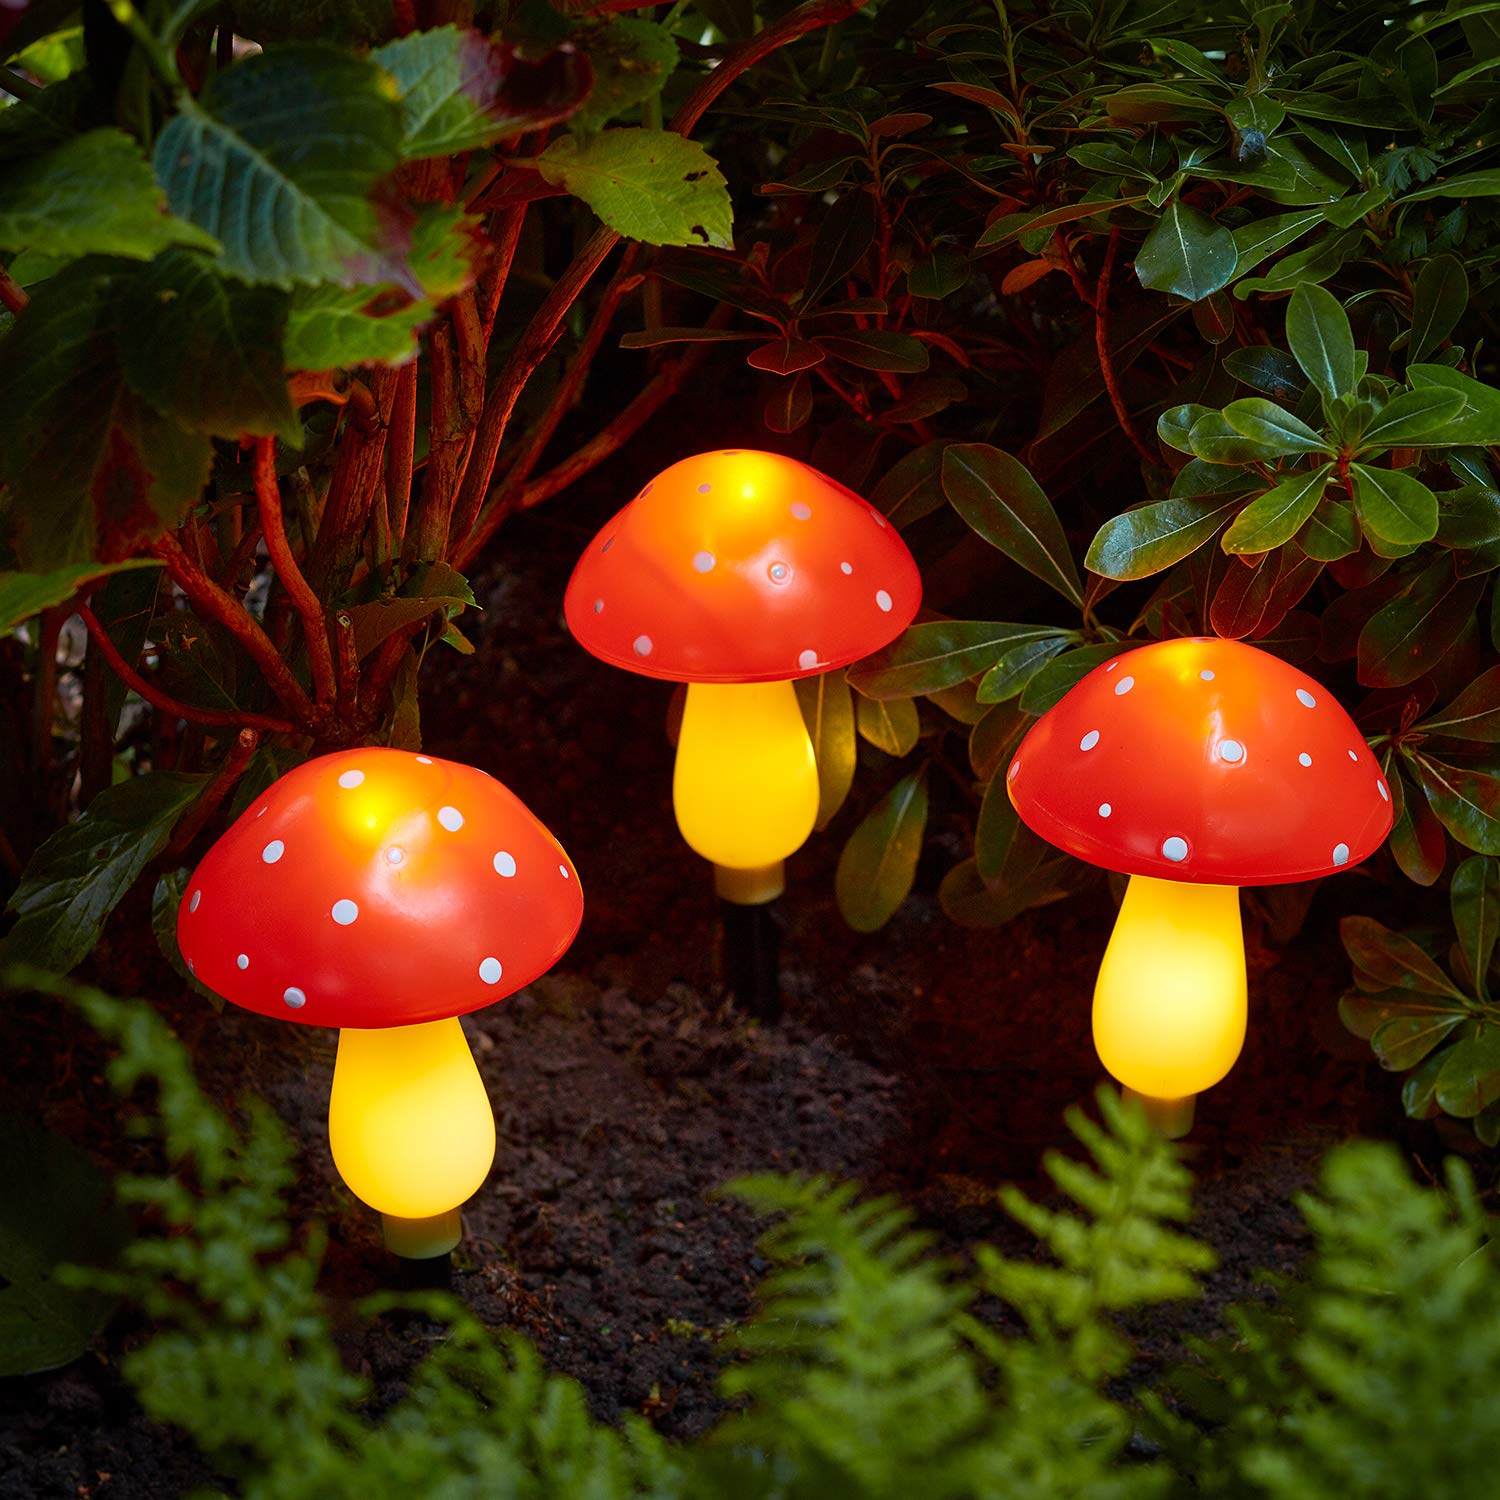 Lights4fun, Inc. Lights4fun, Inc Set of 3 Red Solar Powered Mushroom Toadstool LED Outdoor Waterproof garden Pathway Landscape Lights